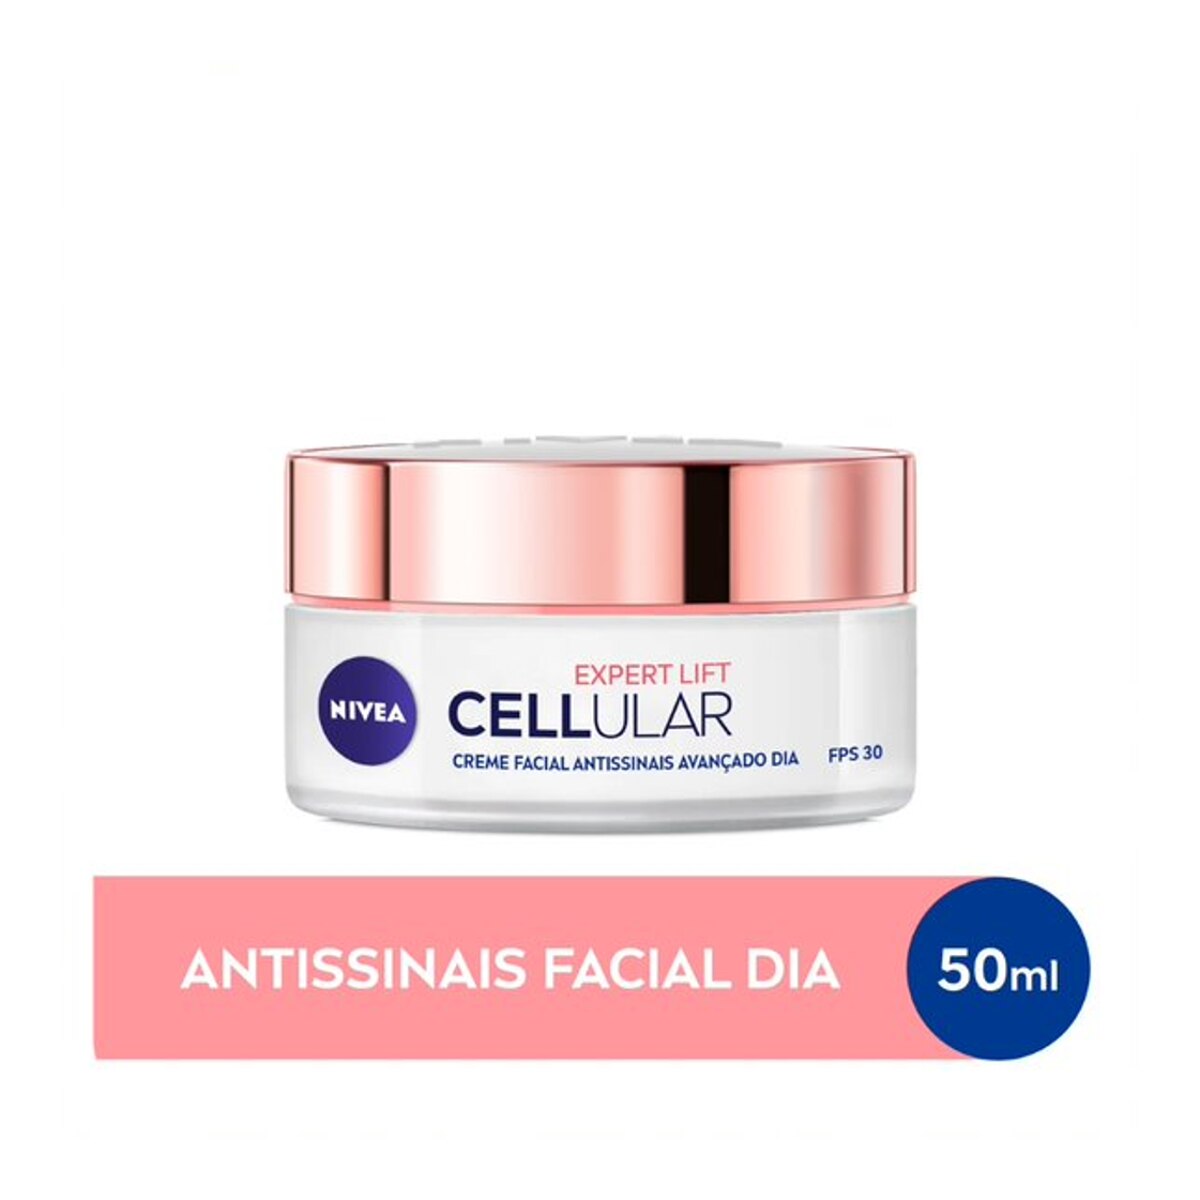 Creme Facial Antissinais Nivea Cellular Expert Lift Avancado Dia FPS30 50ml